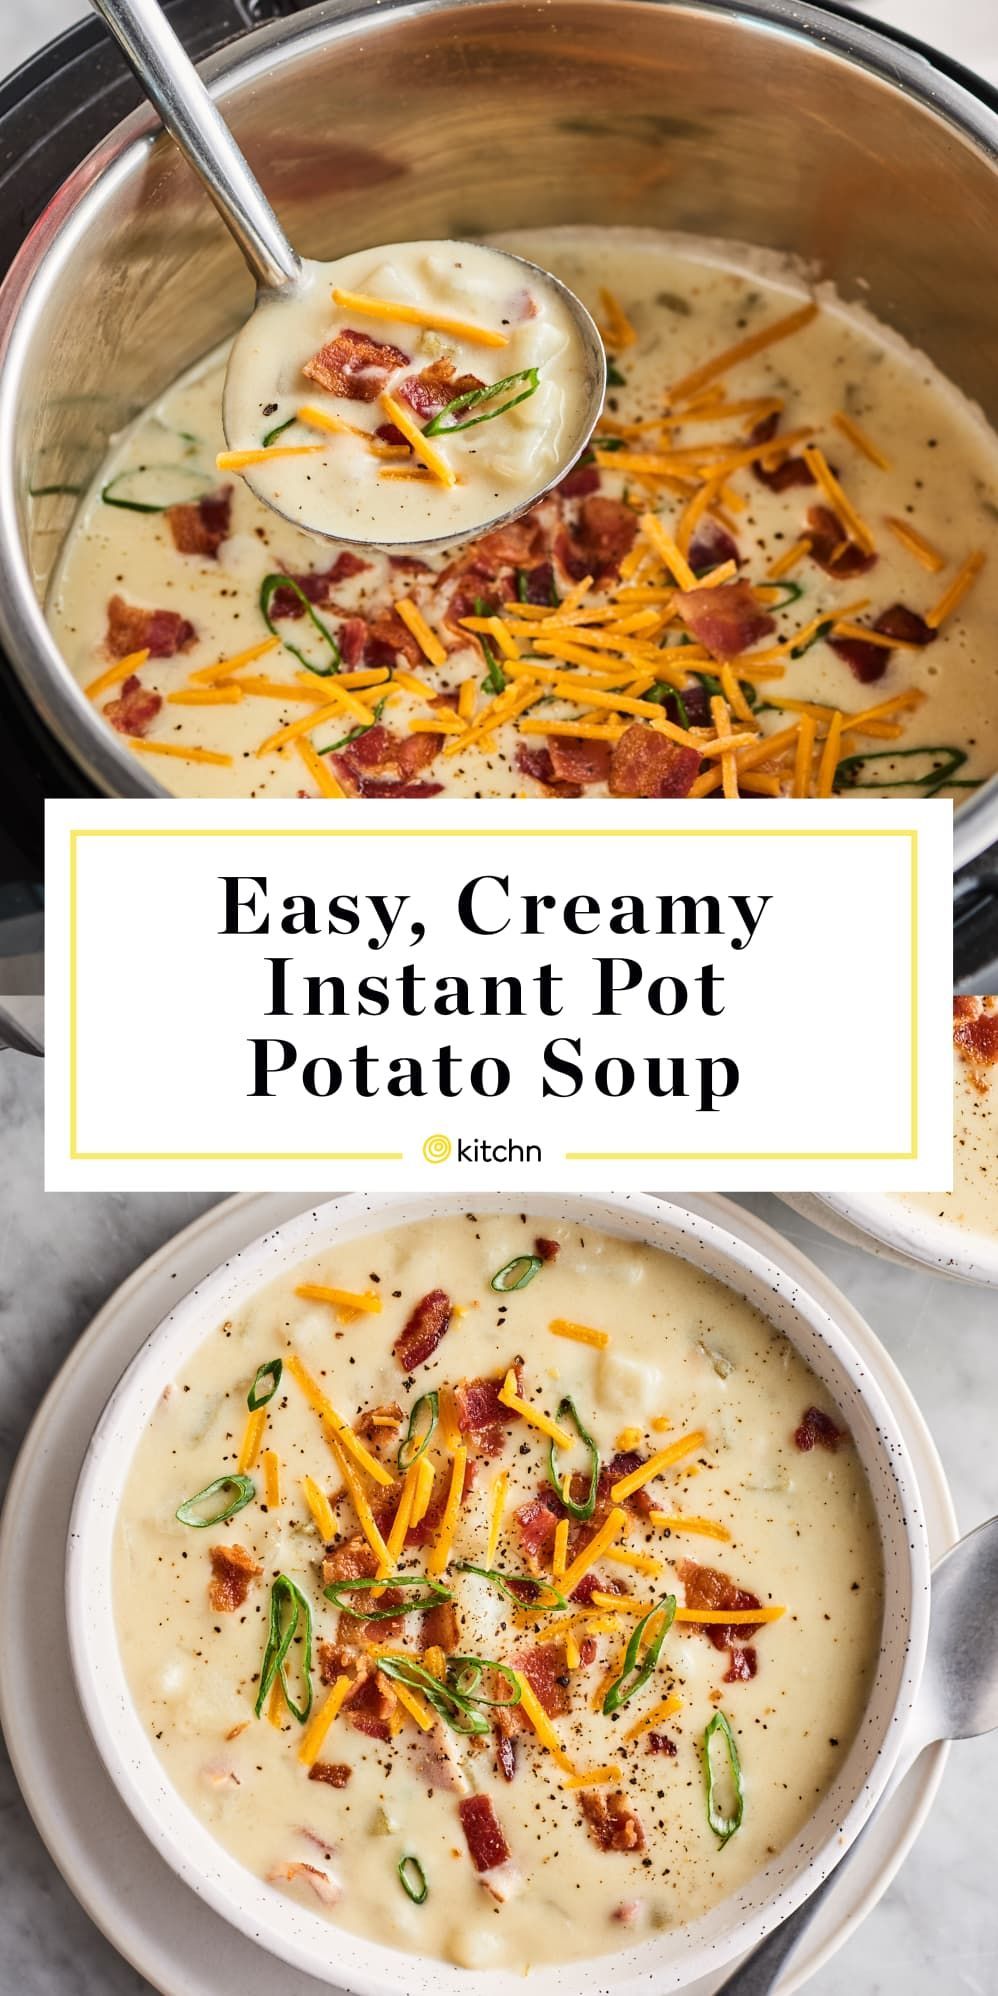 This Instant Pot Potato Soup Is Easy, Creamy, and Loaded with Bacon - This Instant Pot Potato Soup Is Easy, Creamy, and Loaded with Bacon -   18 healthy instant pot recipes soup ideas